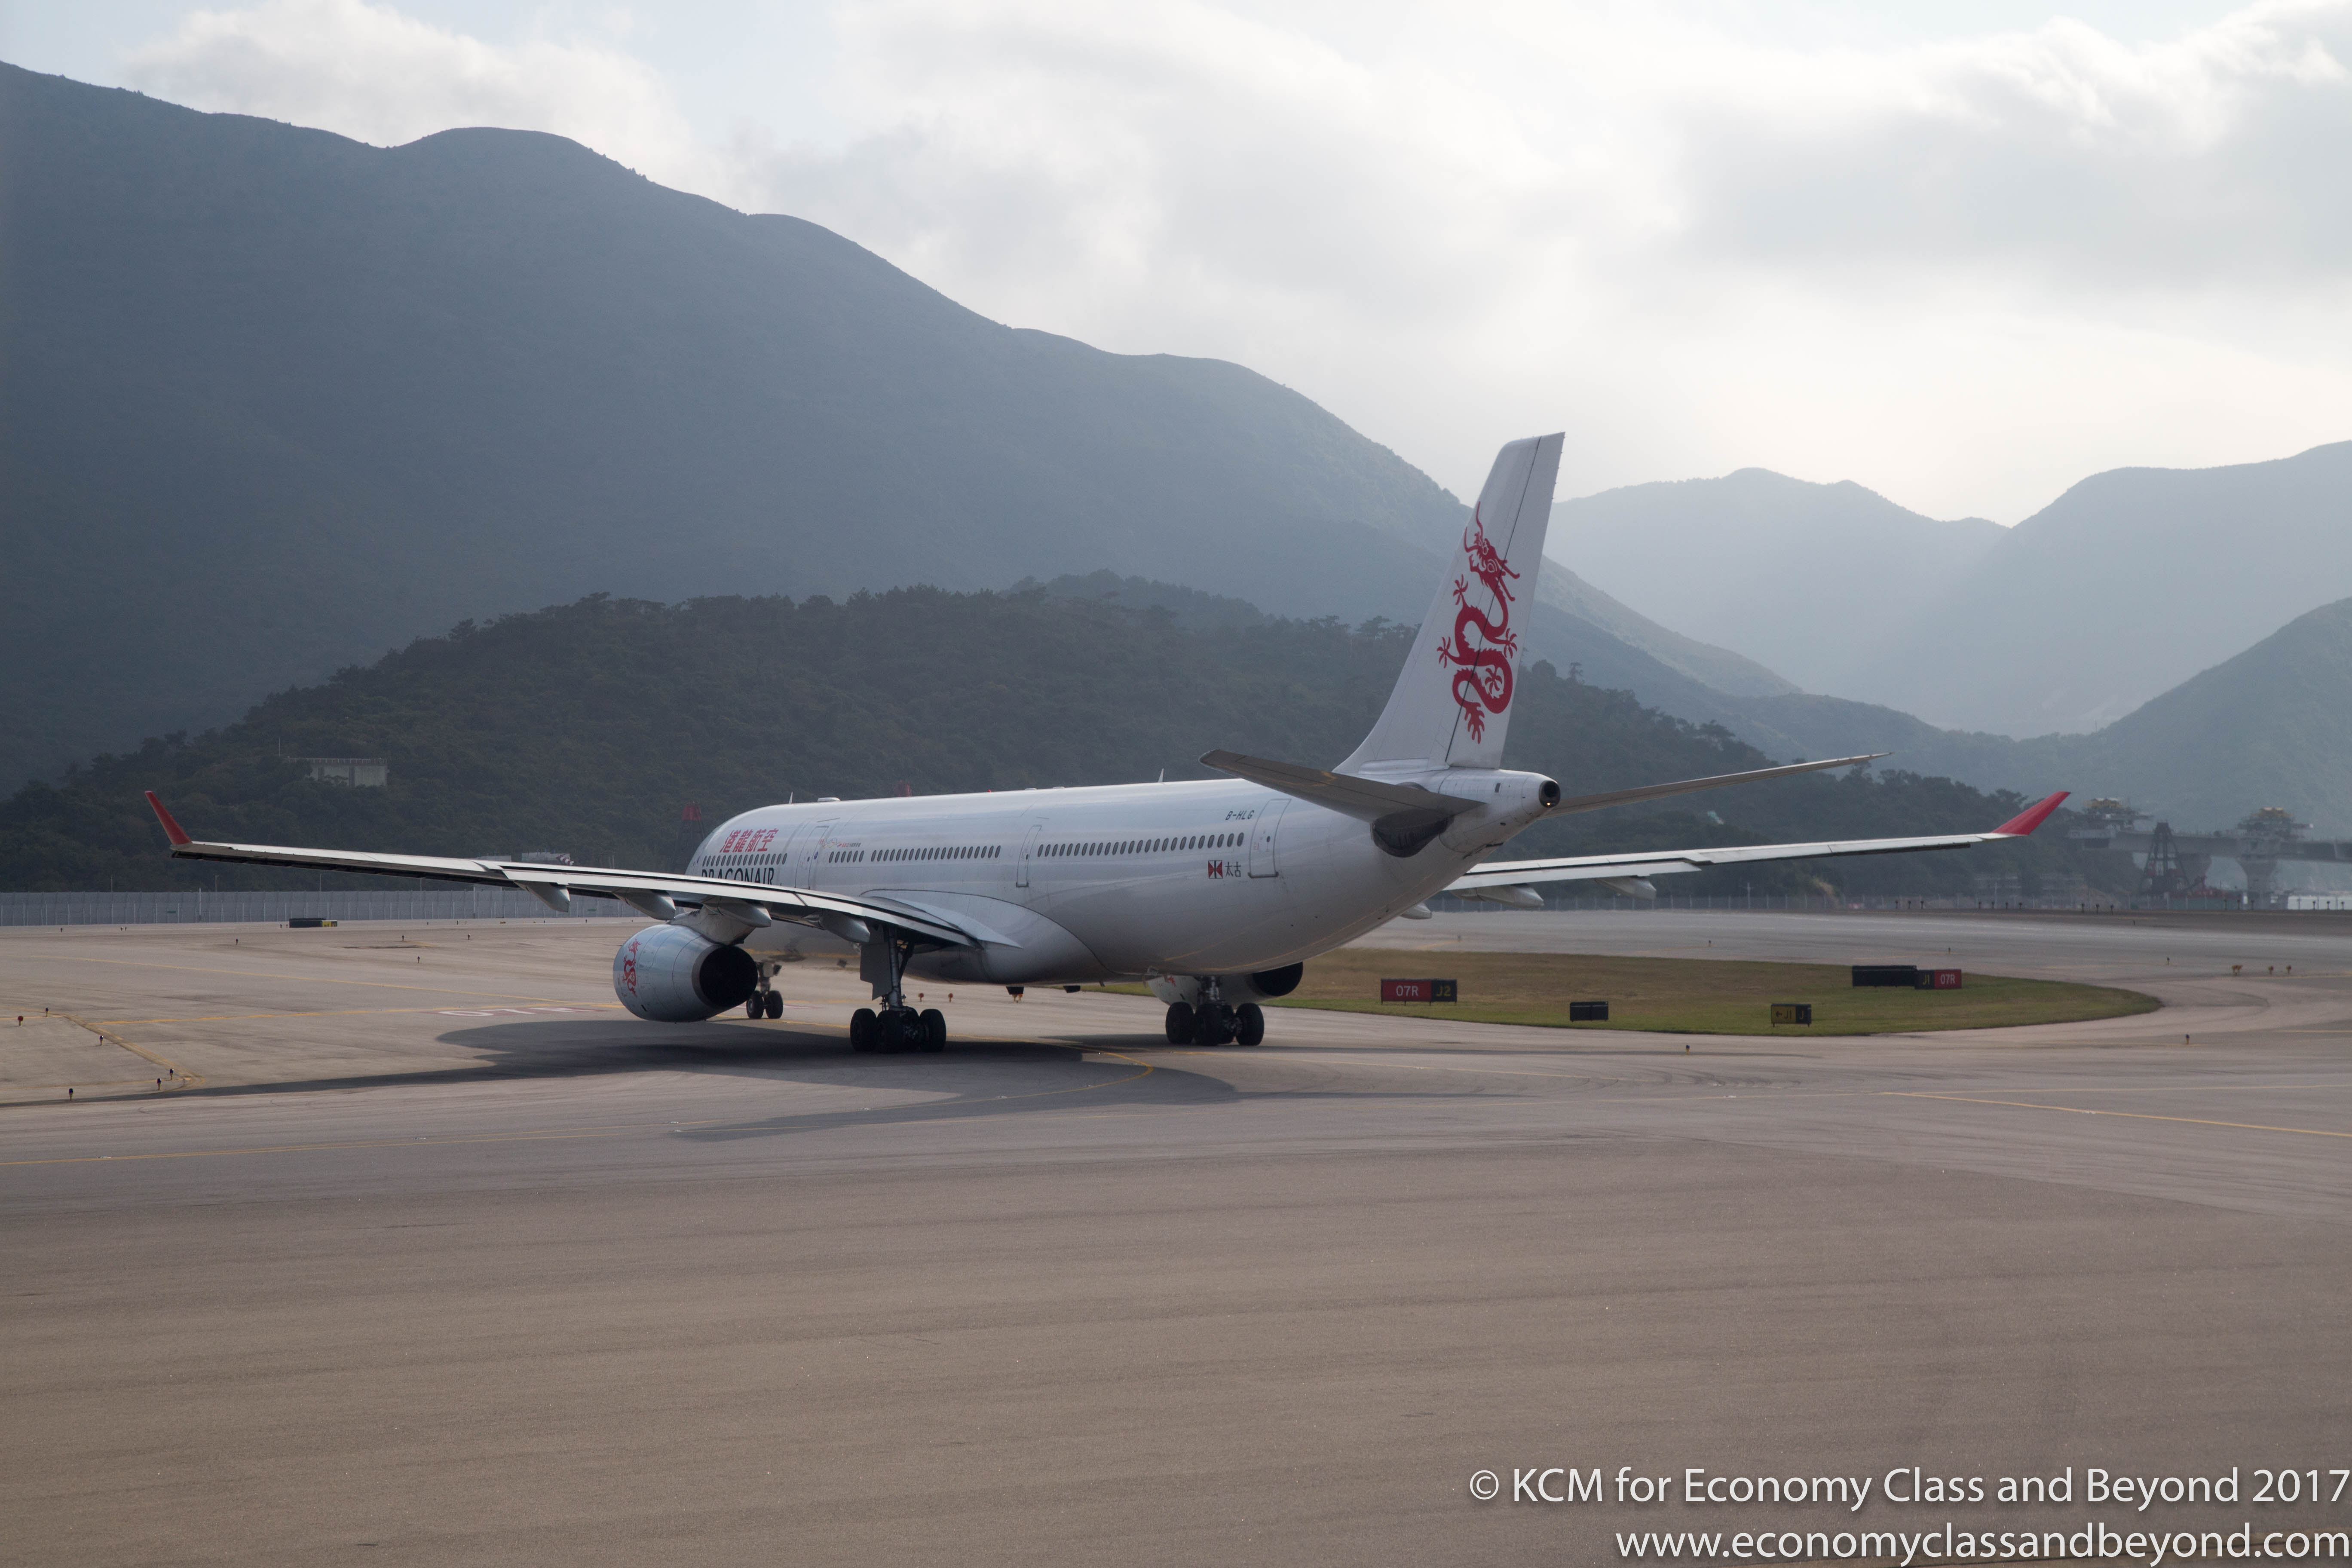 Airplane Art - Dragon Air Airbus A330-300 departing Hong Kong